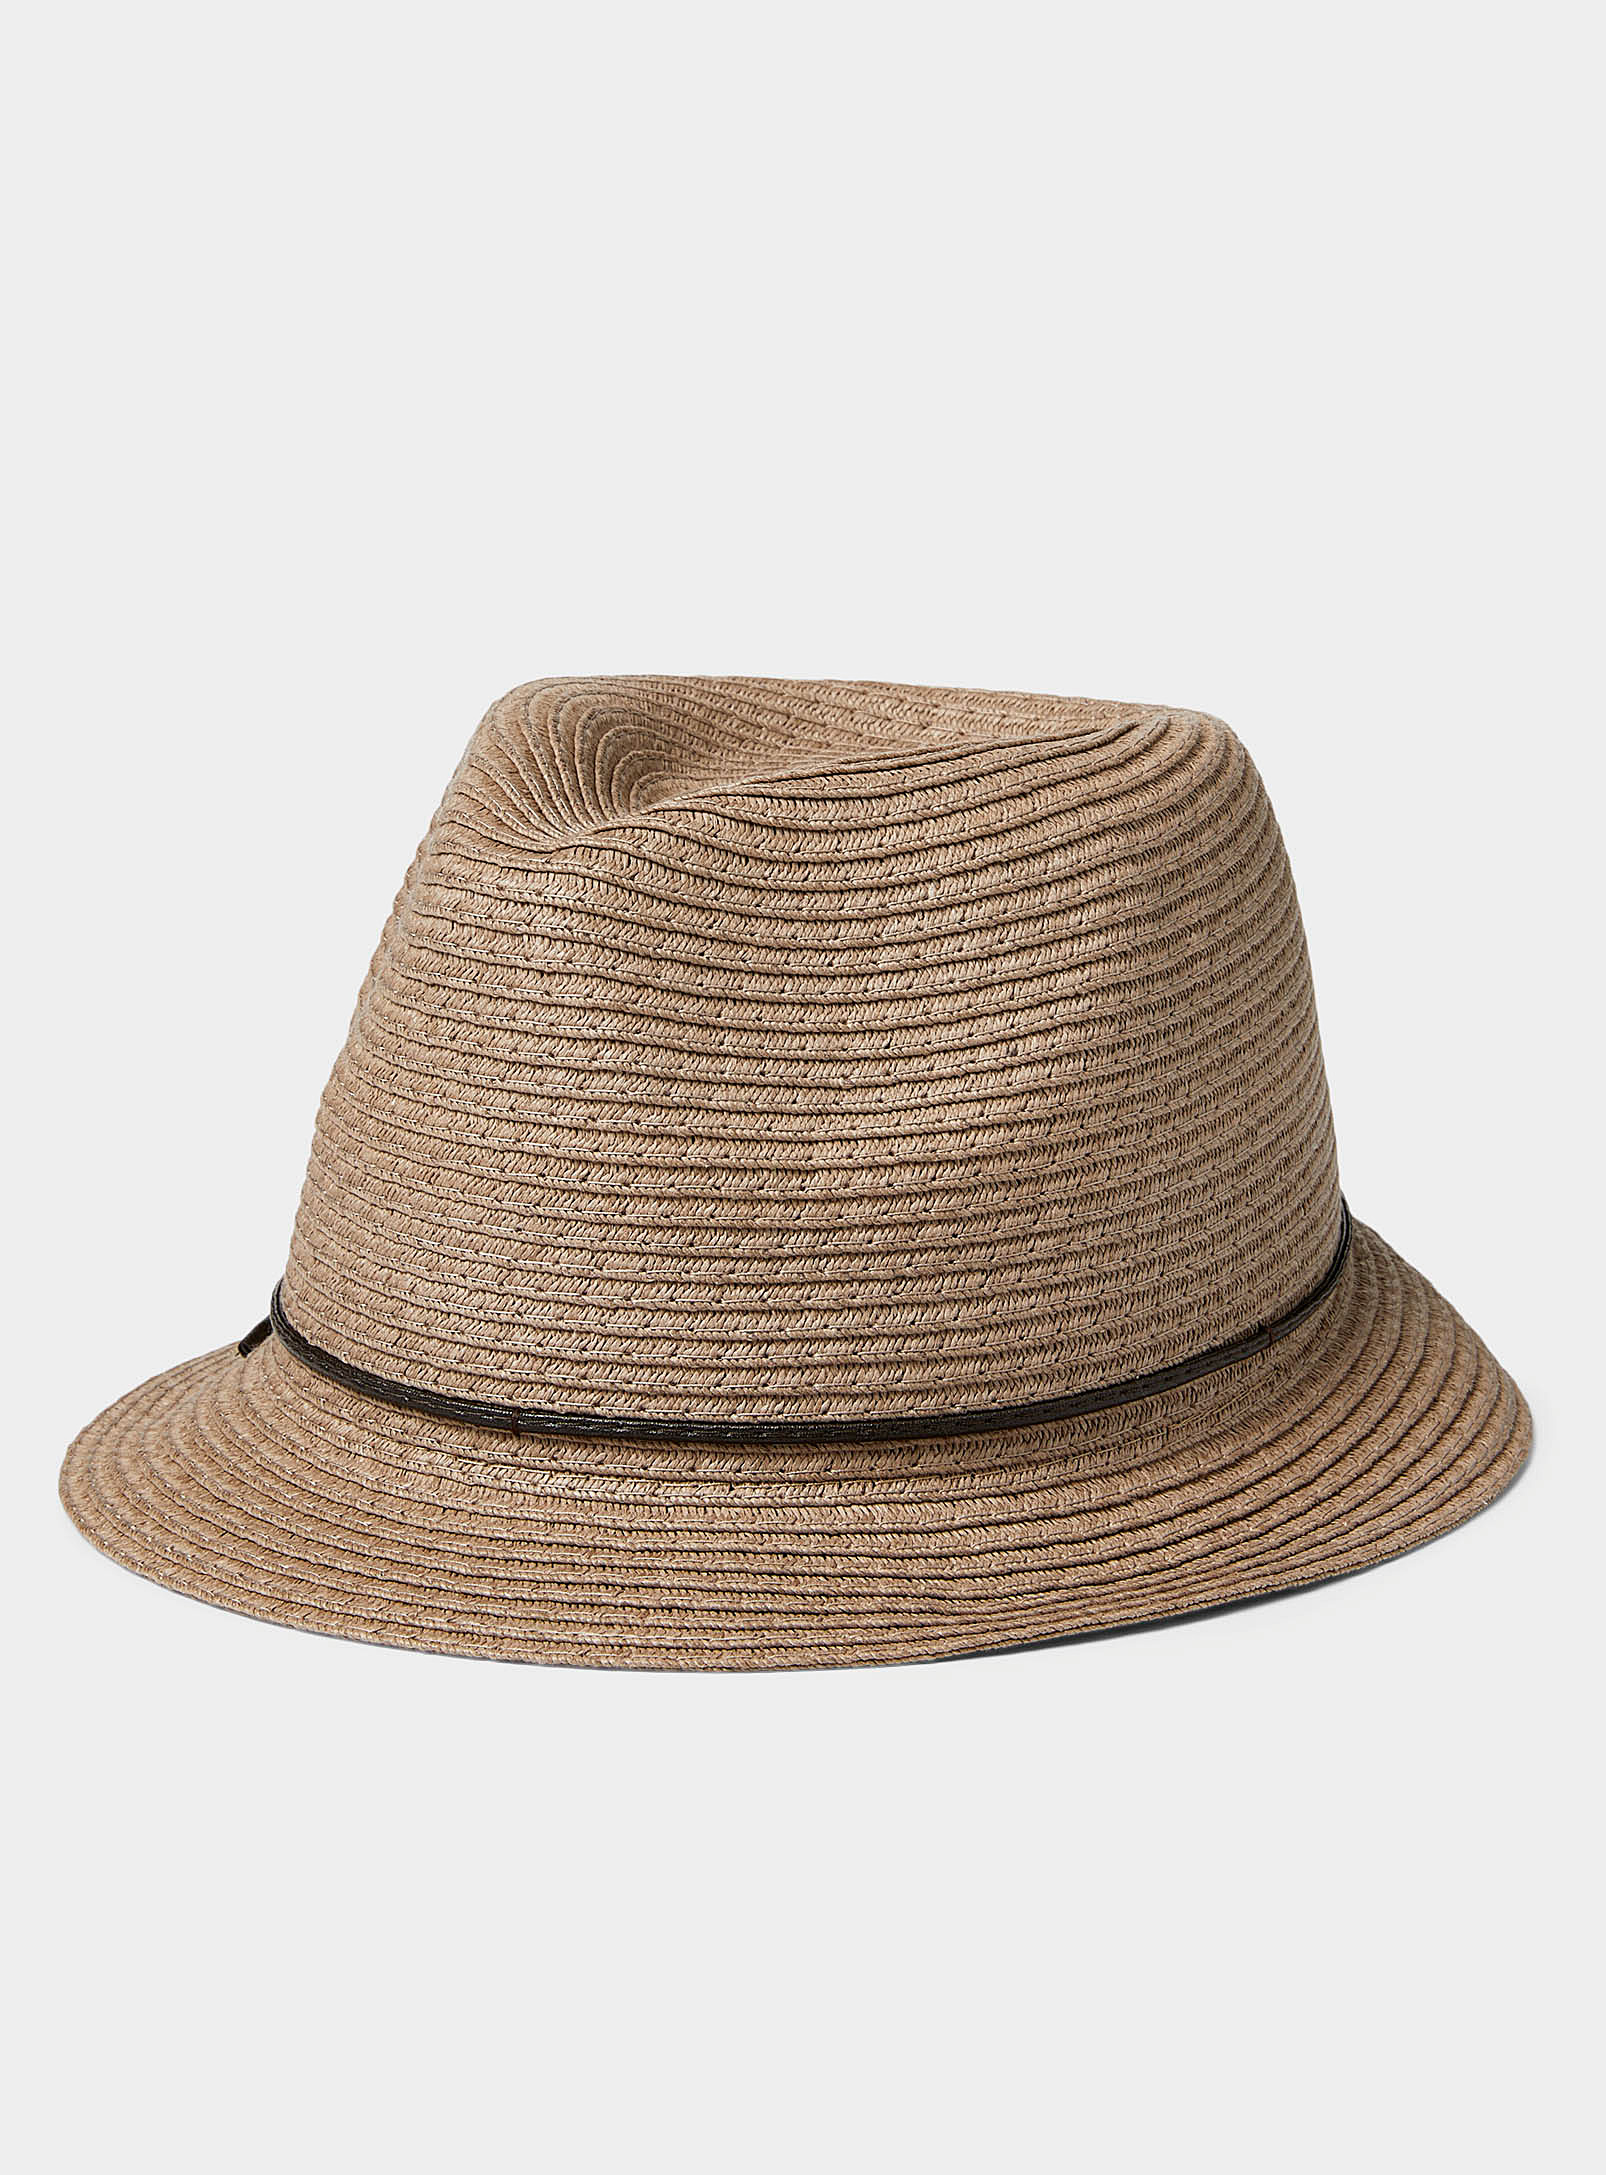 Canadian Hat Minimalist Straw Fedora In Light Brown